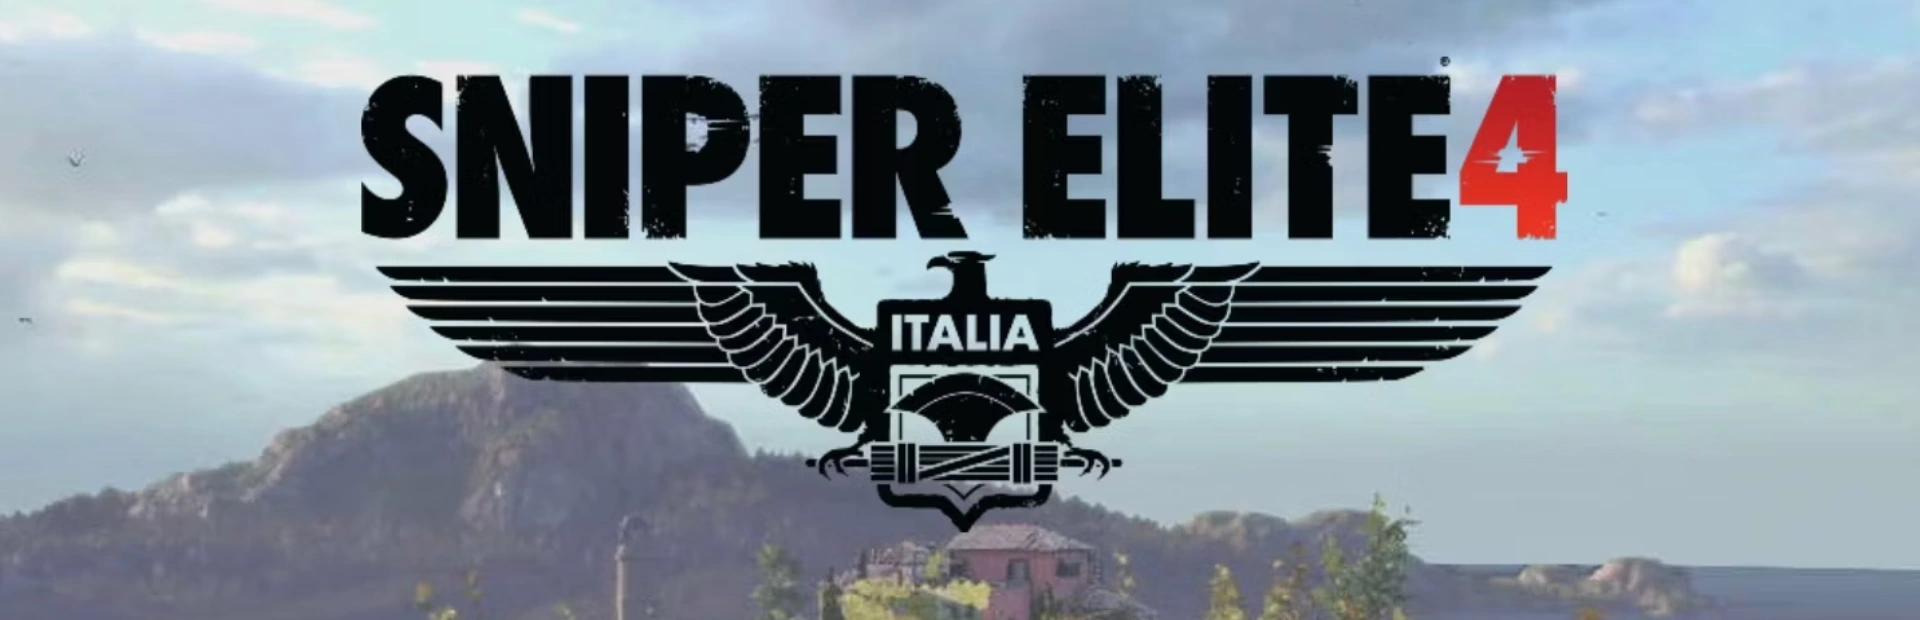 Sniper Elite 4 DELUXE EDITION.banner3